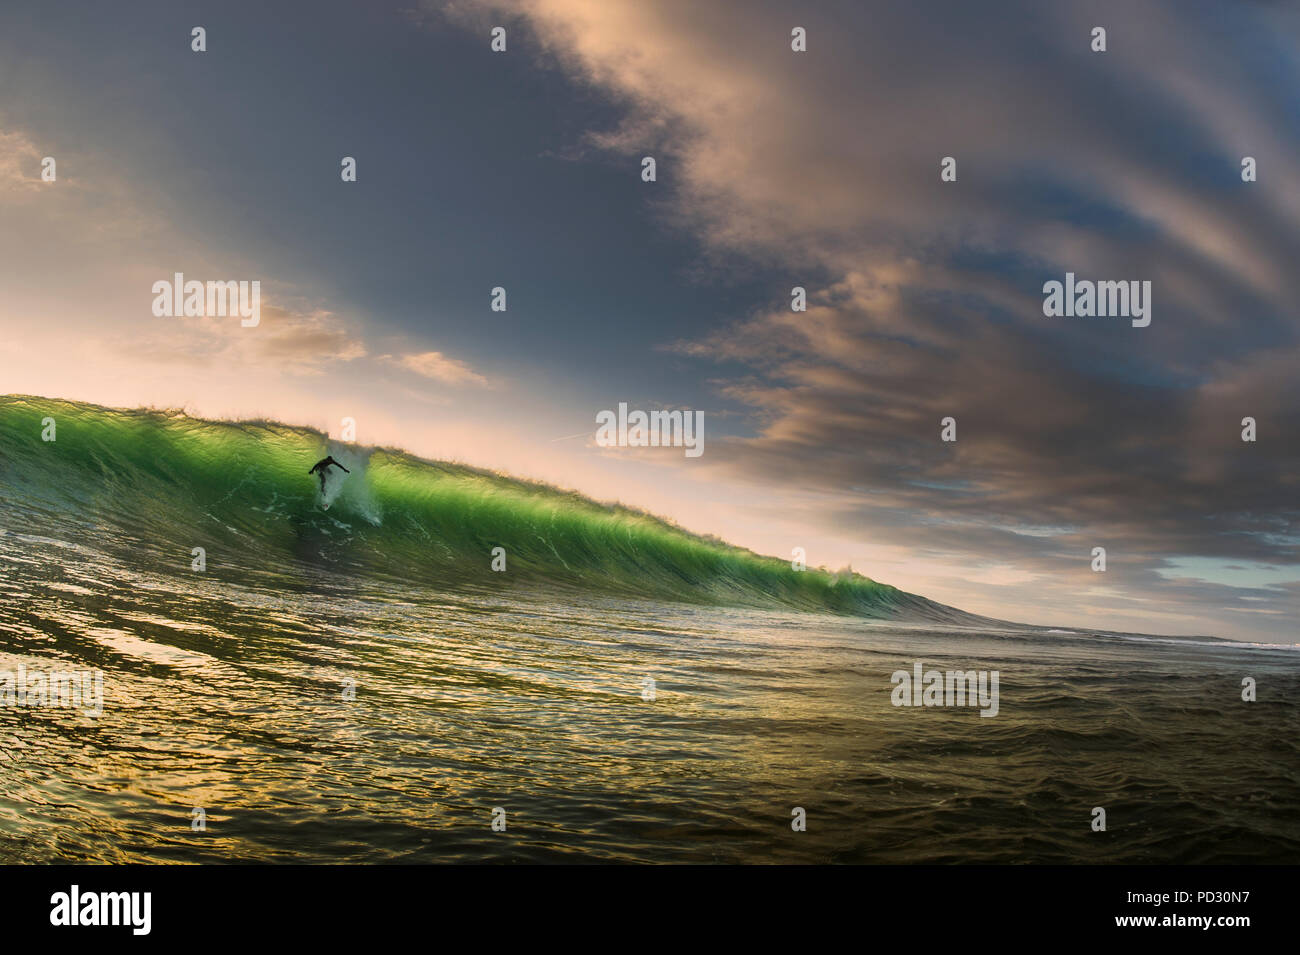 Surfer surfing on barreling wave, Crab Island, Doolin, Clare, Ireland Stock Photo